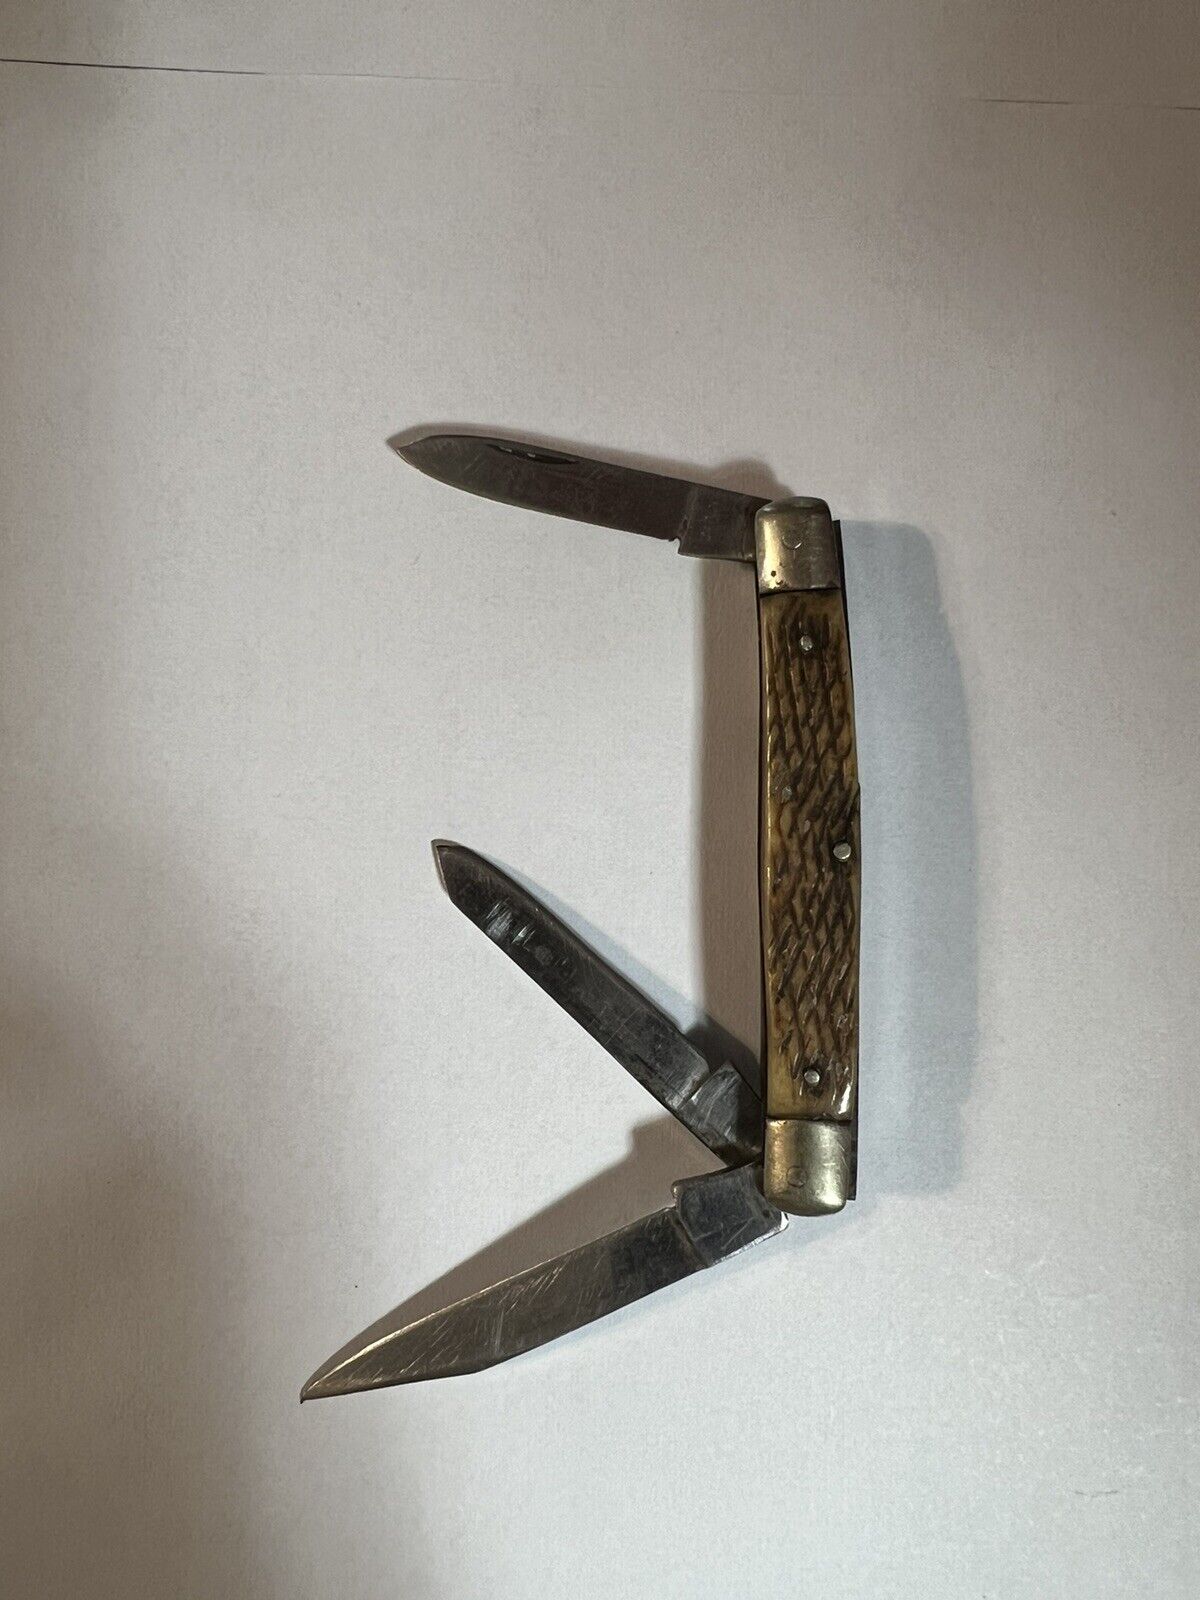 Vintage 1970’s Era Premium Stock Knife Carbon Steel Blades